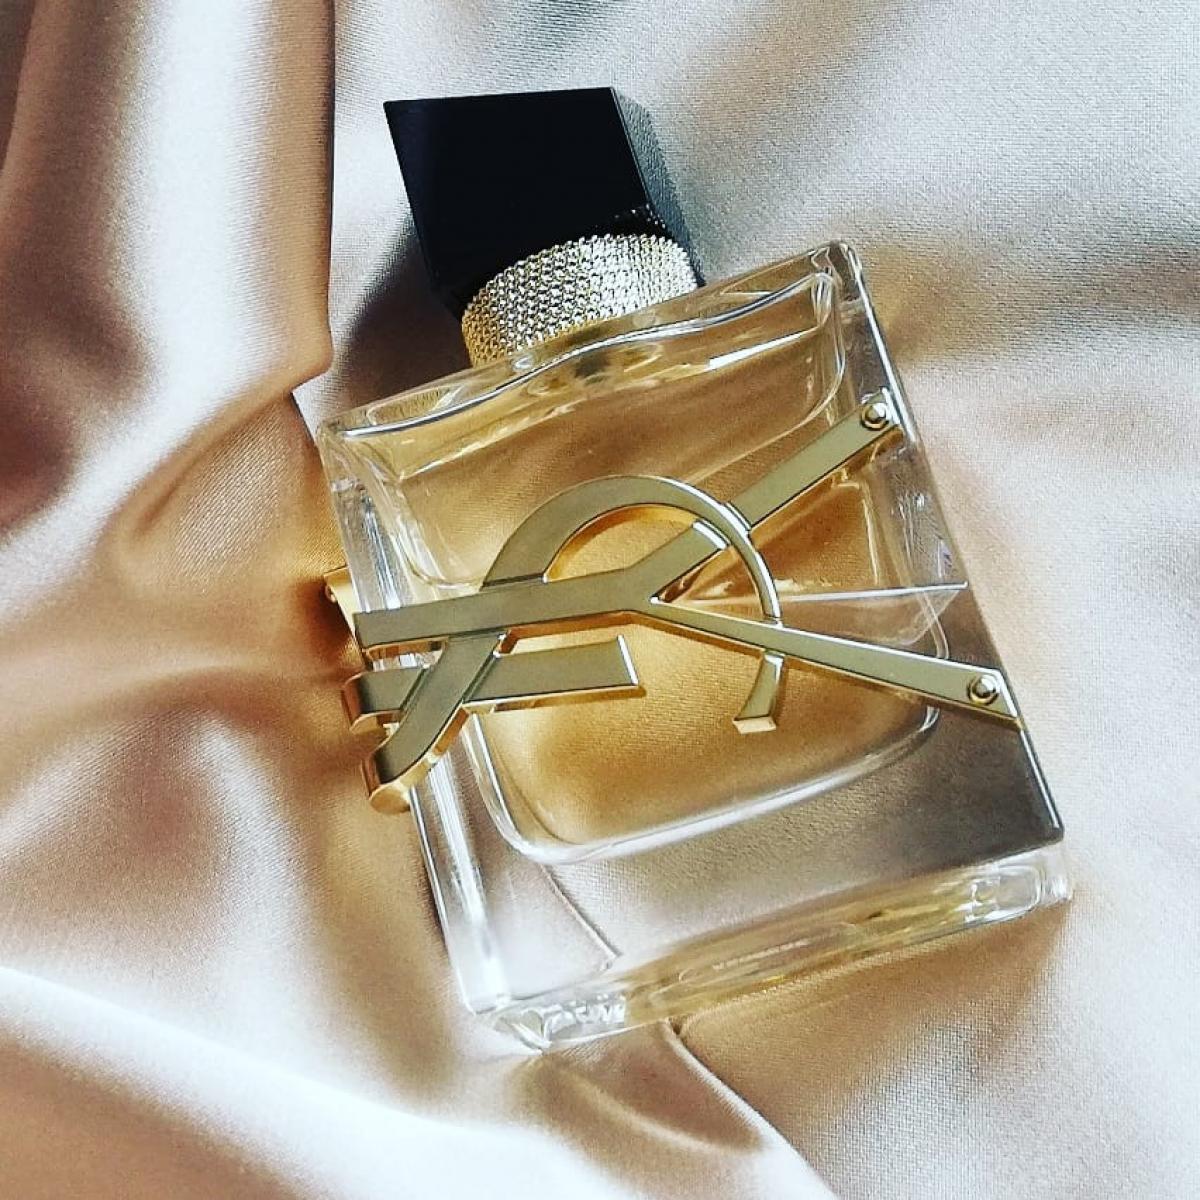 Libre Yves Saint Laurent perfume a new fragrance for women 2019